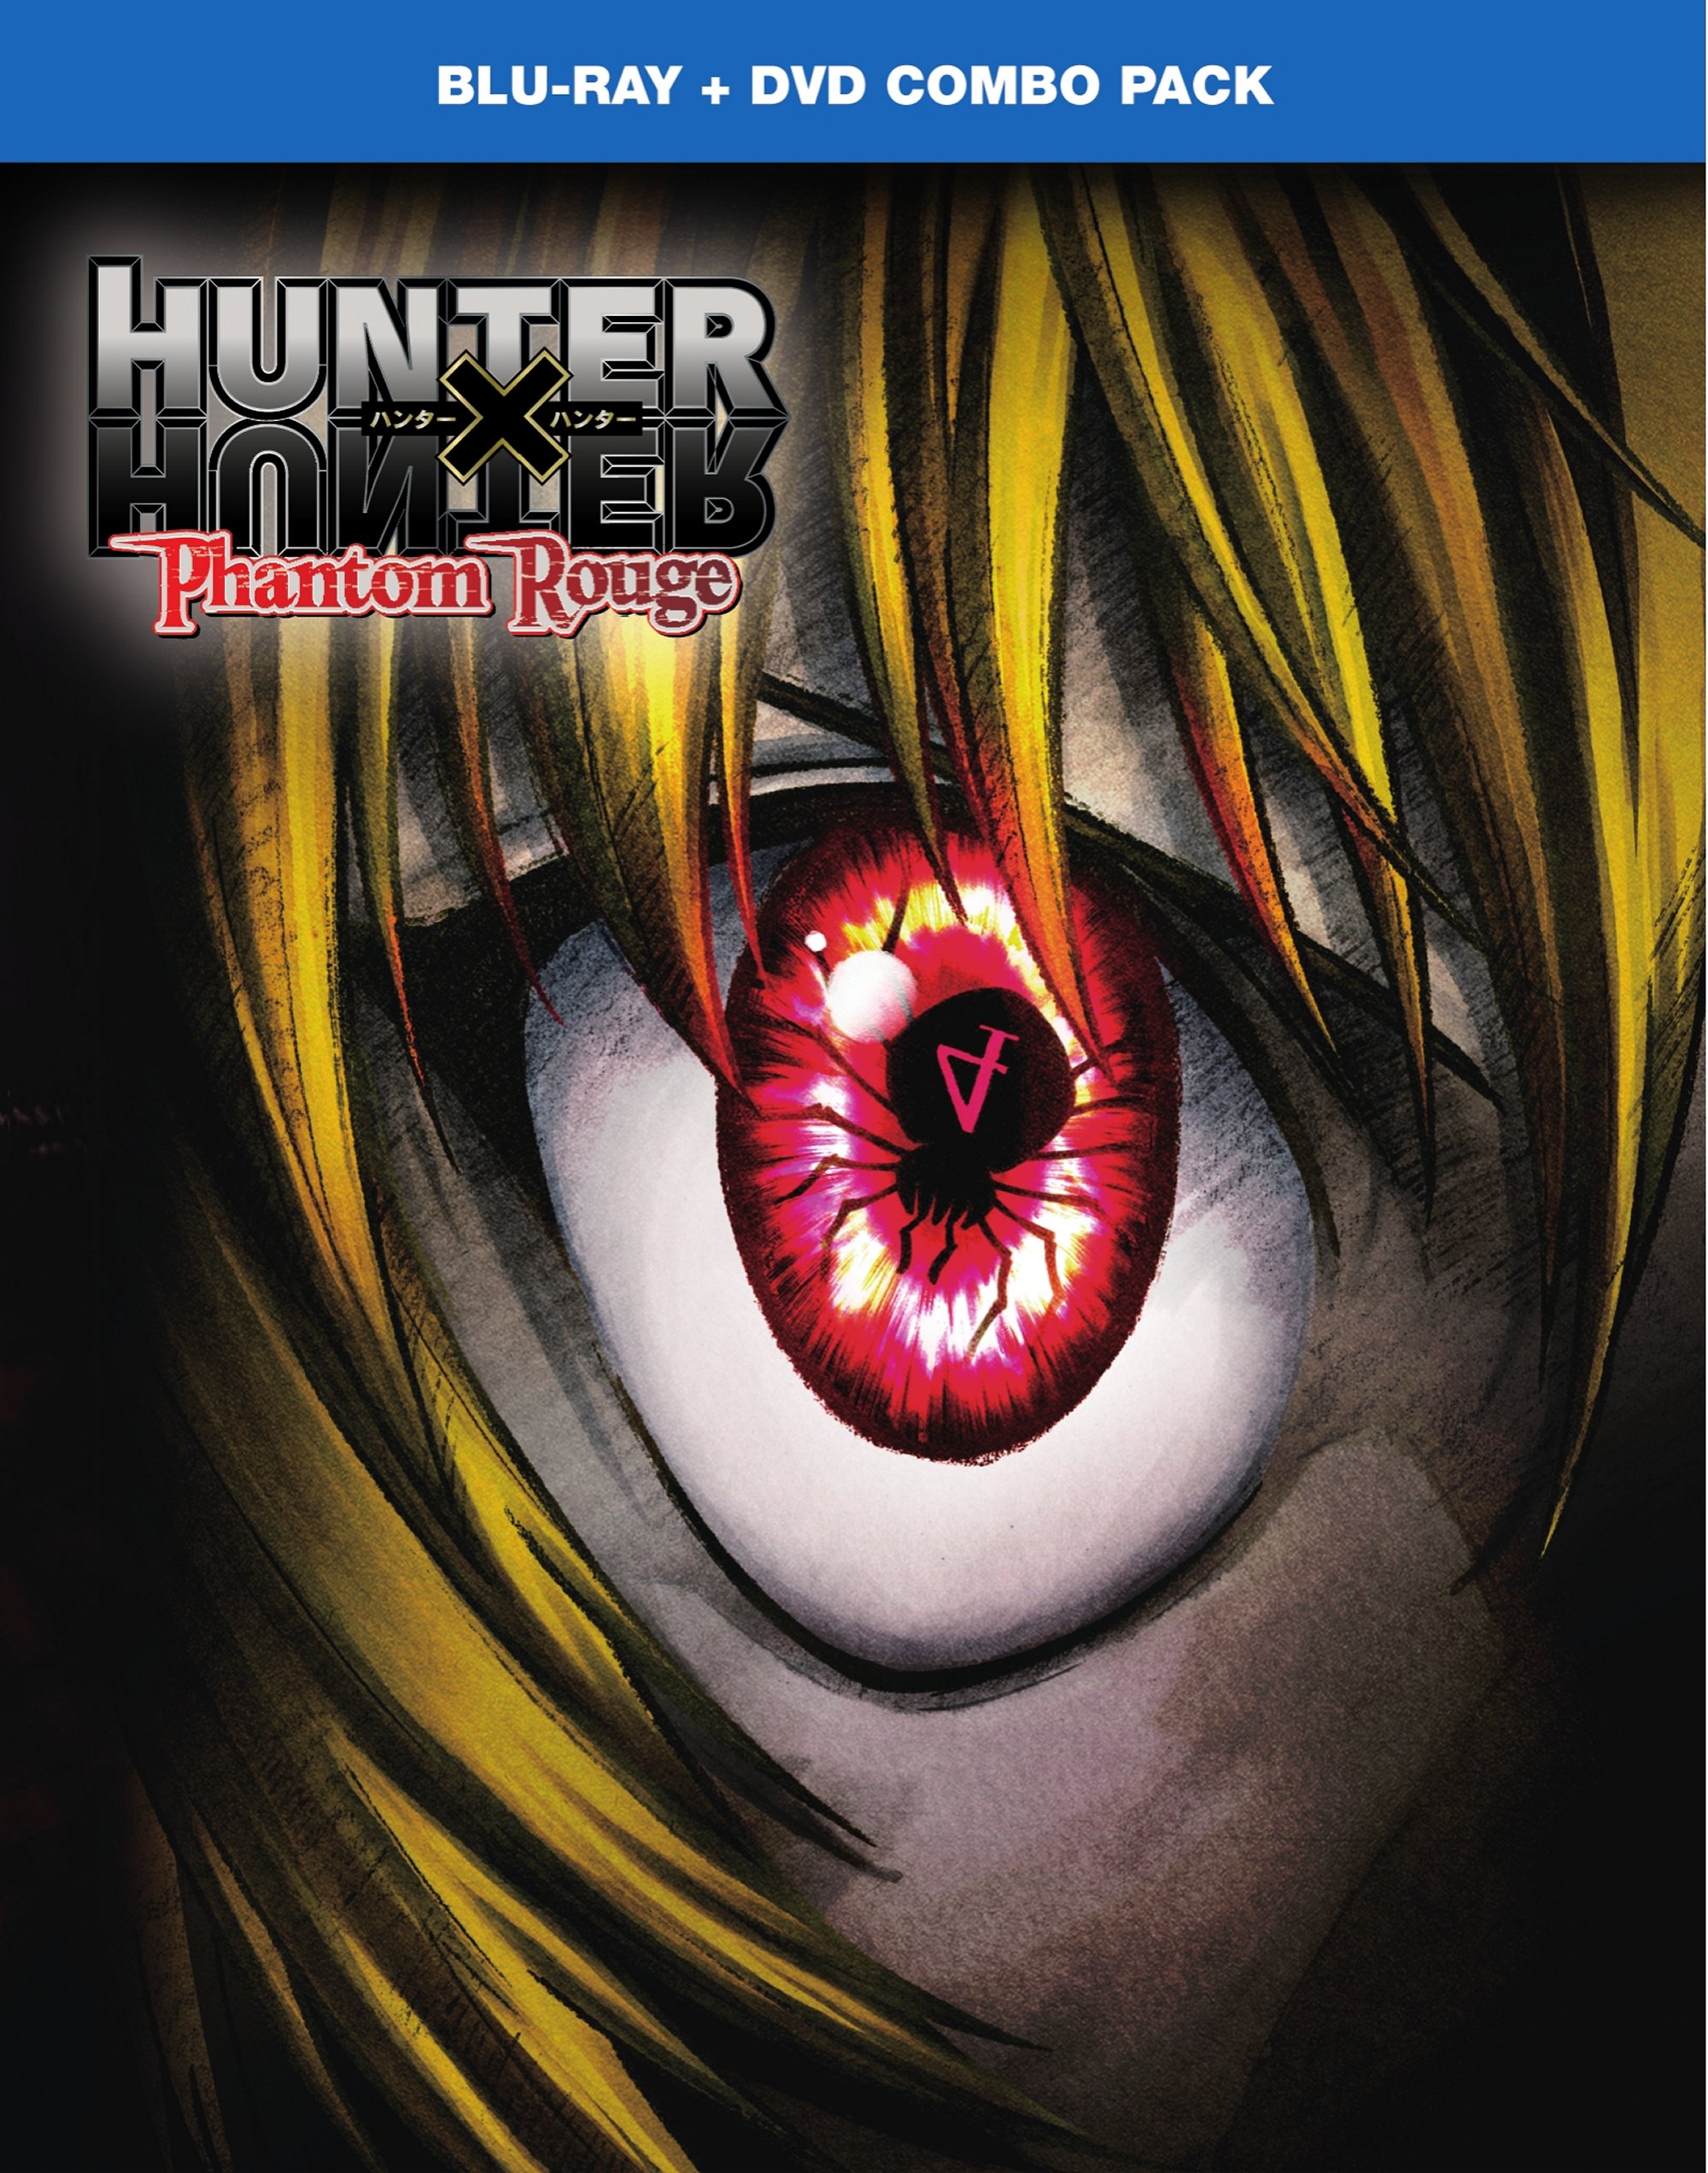 Hunter X Hunter: Set 6 [Blu-ray] - Best Buy